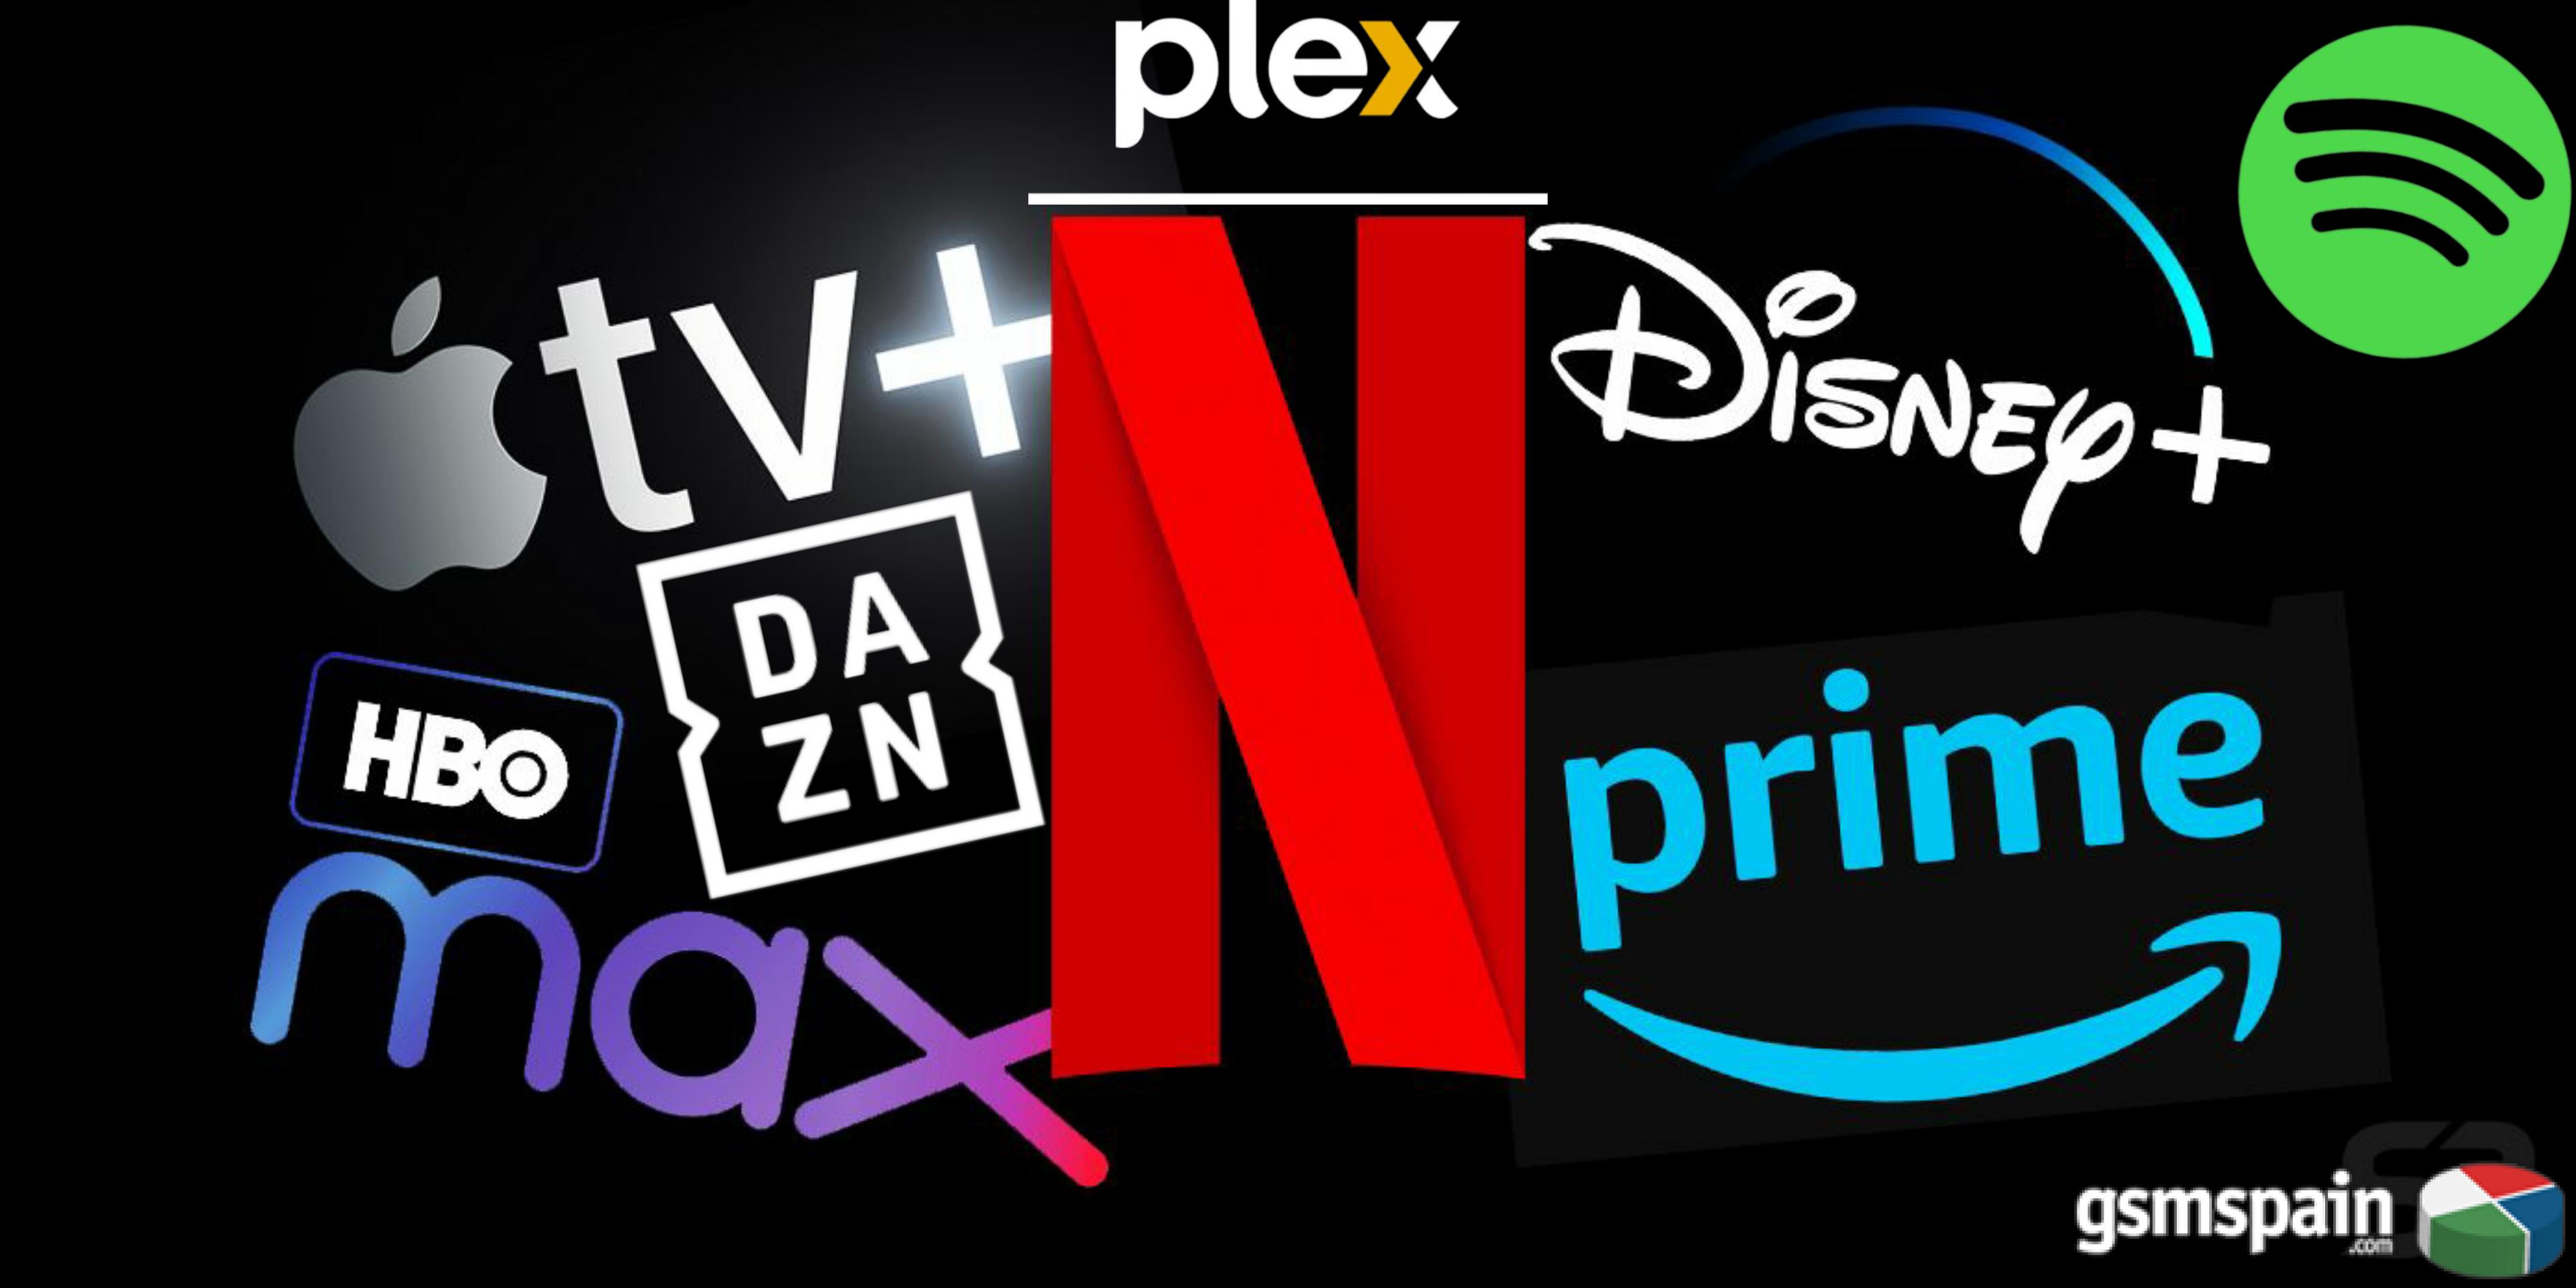 [VENDO] Se vende Netflix, Hbo, Disney+, Plex, Dazn, Spotify y mas